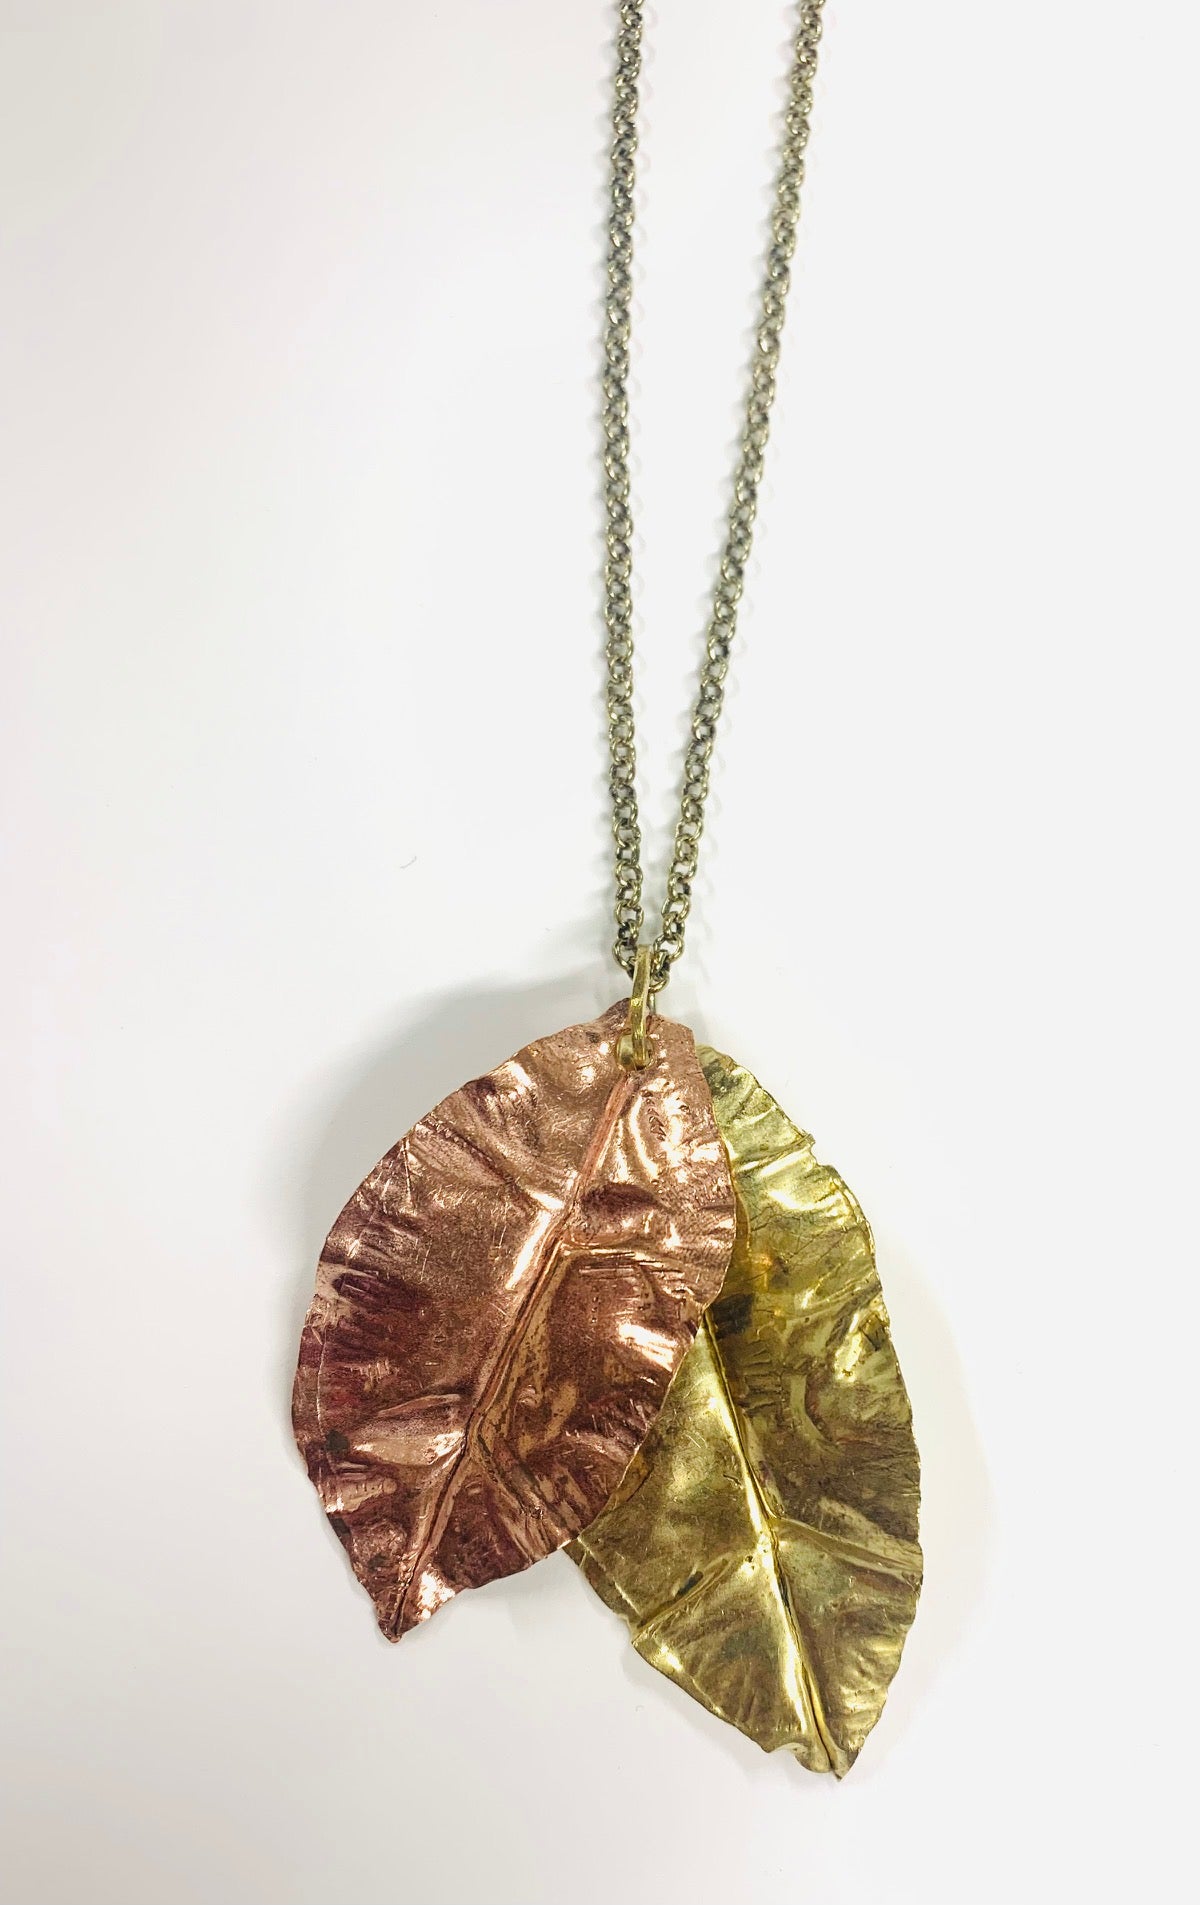 Copper brass leaf pendant